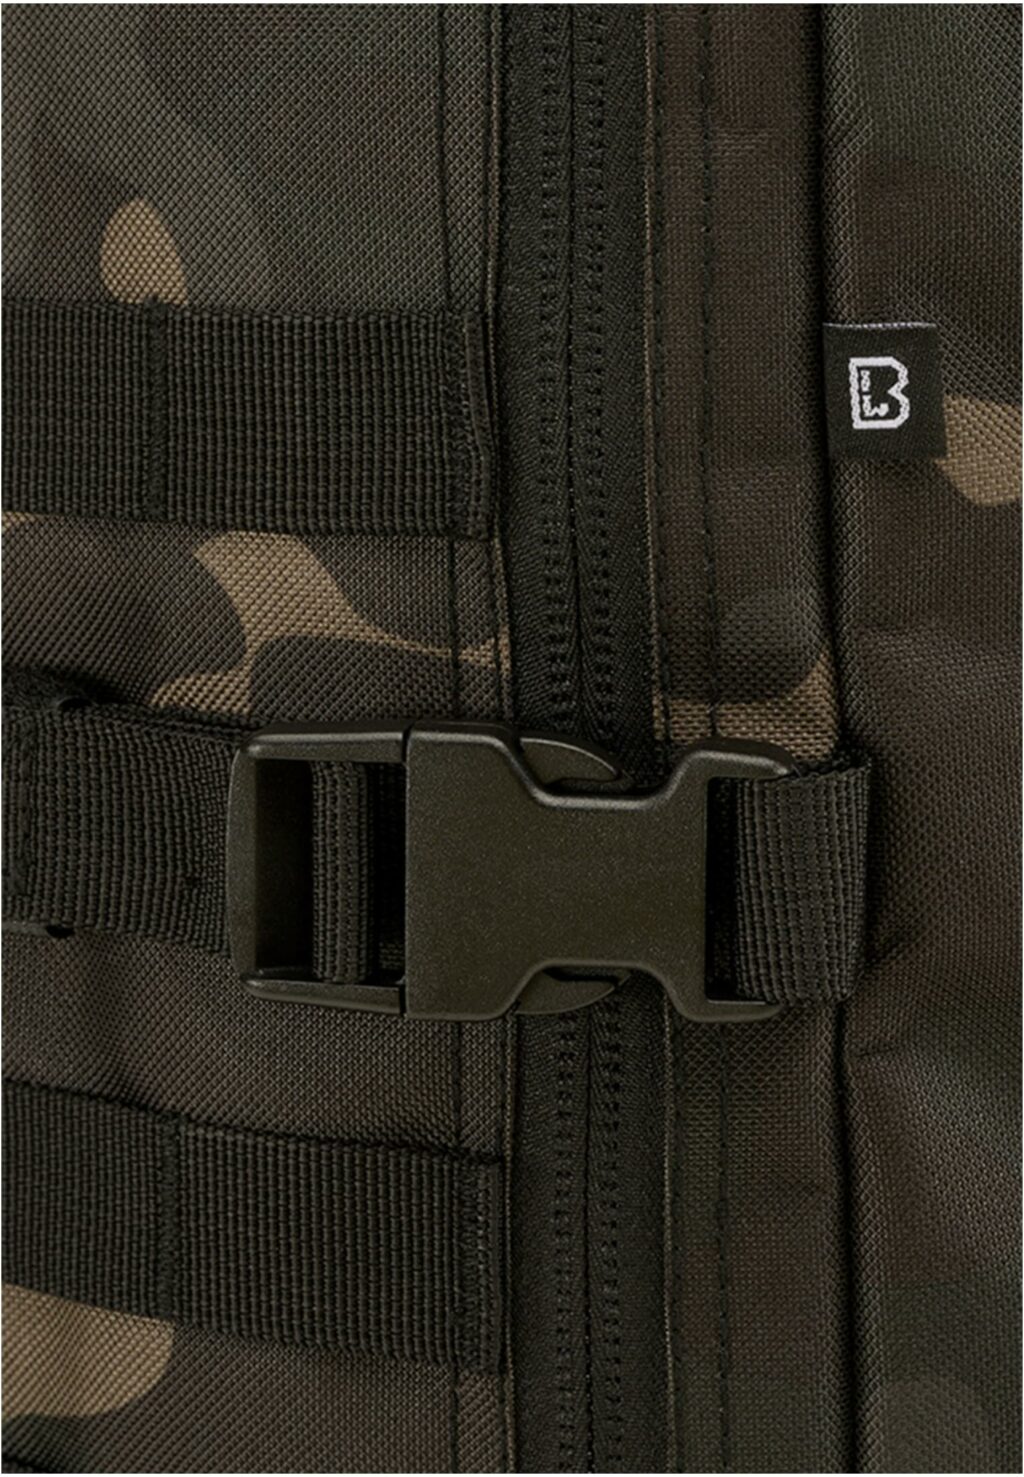 Brandit US Cooper Patch Large Backpack dark camo one BD8098